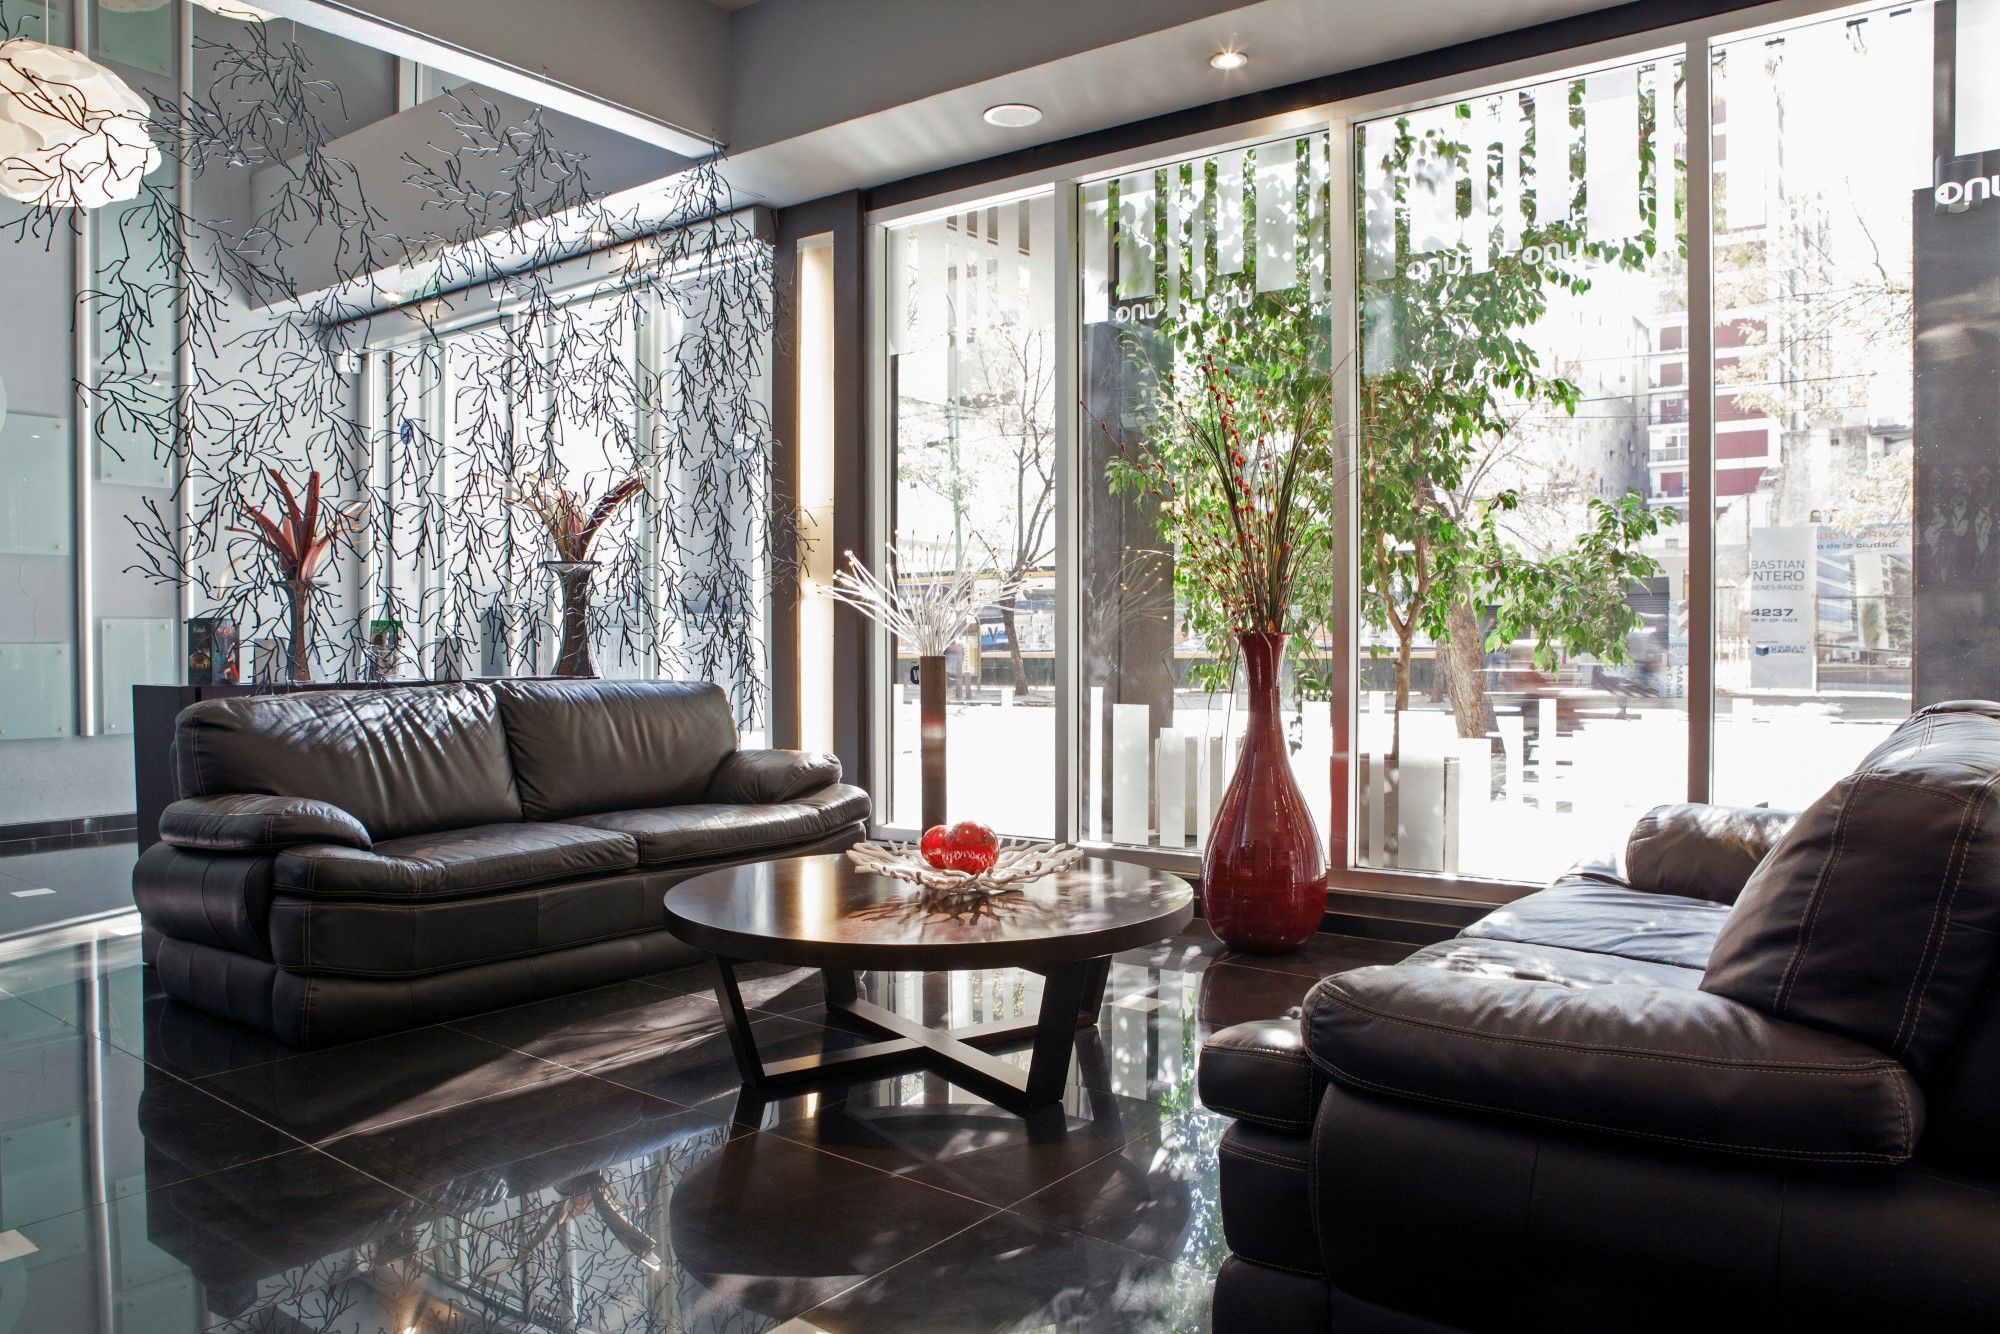 Uno Buenos Aires Suites Exterior photo